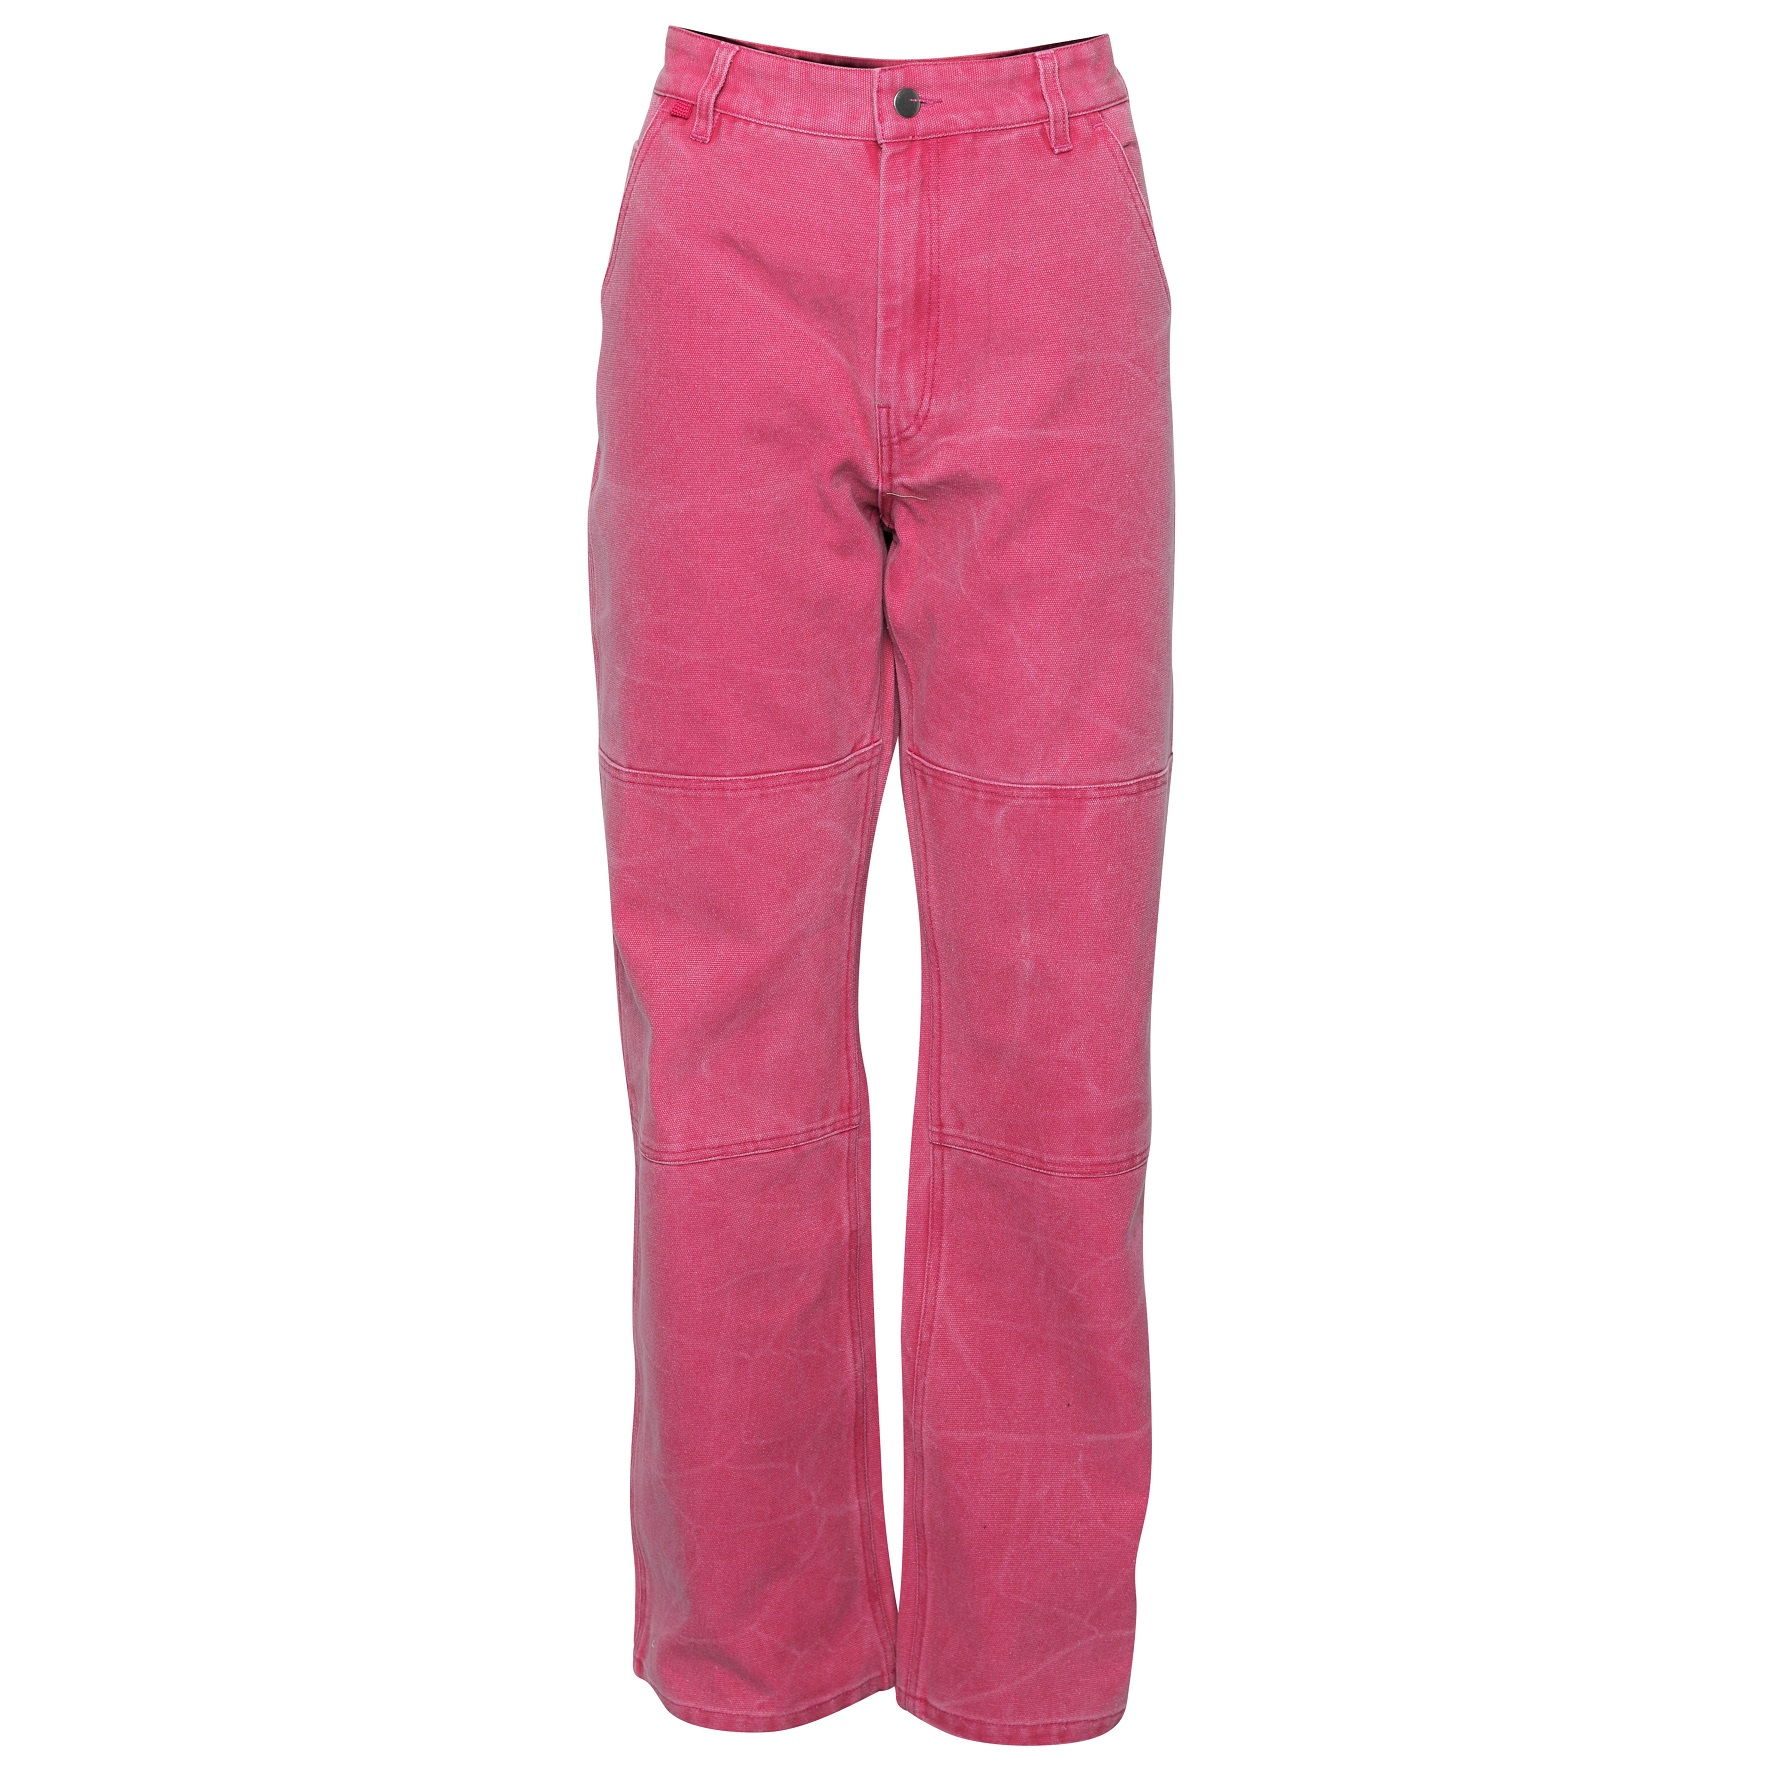 Acne Studios Cotton Canvas Trouser in Fuchsia Pink